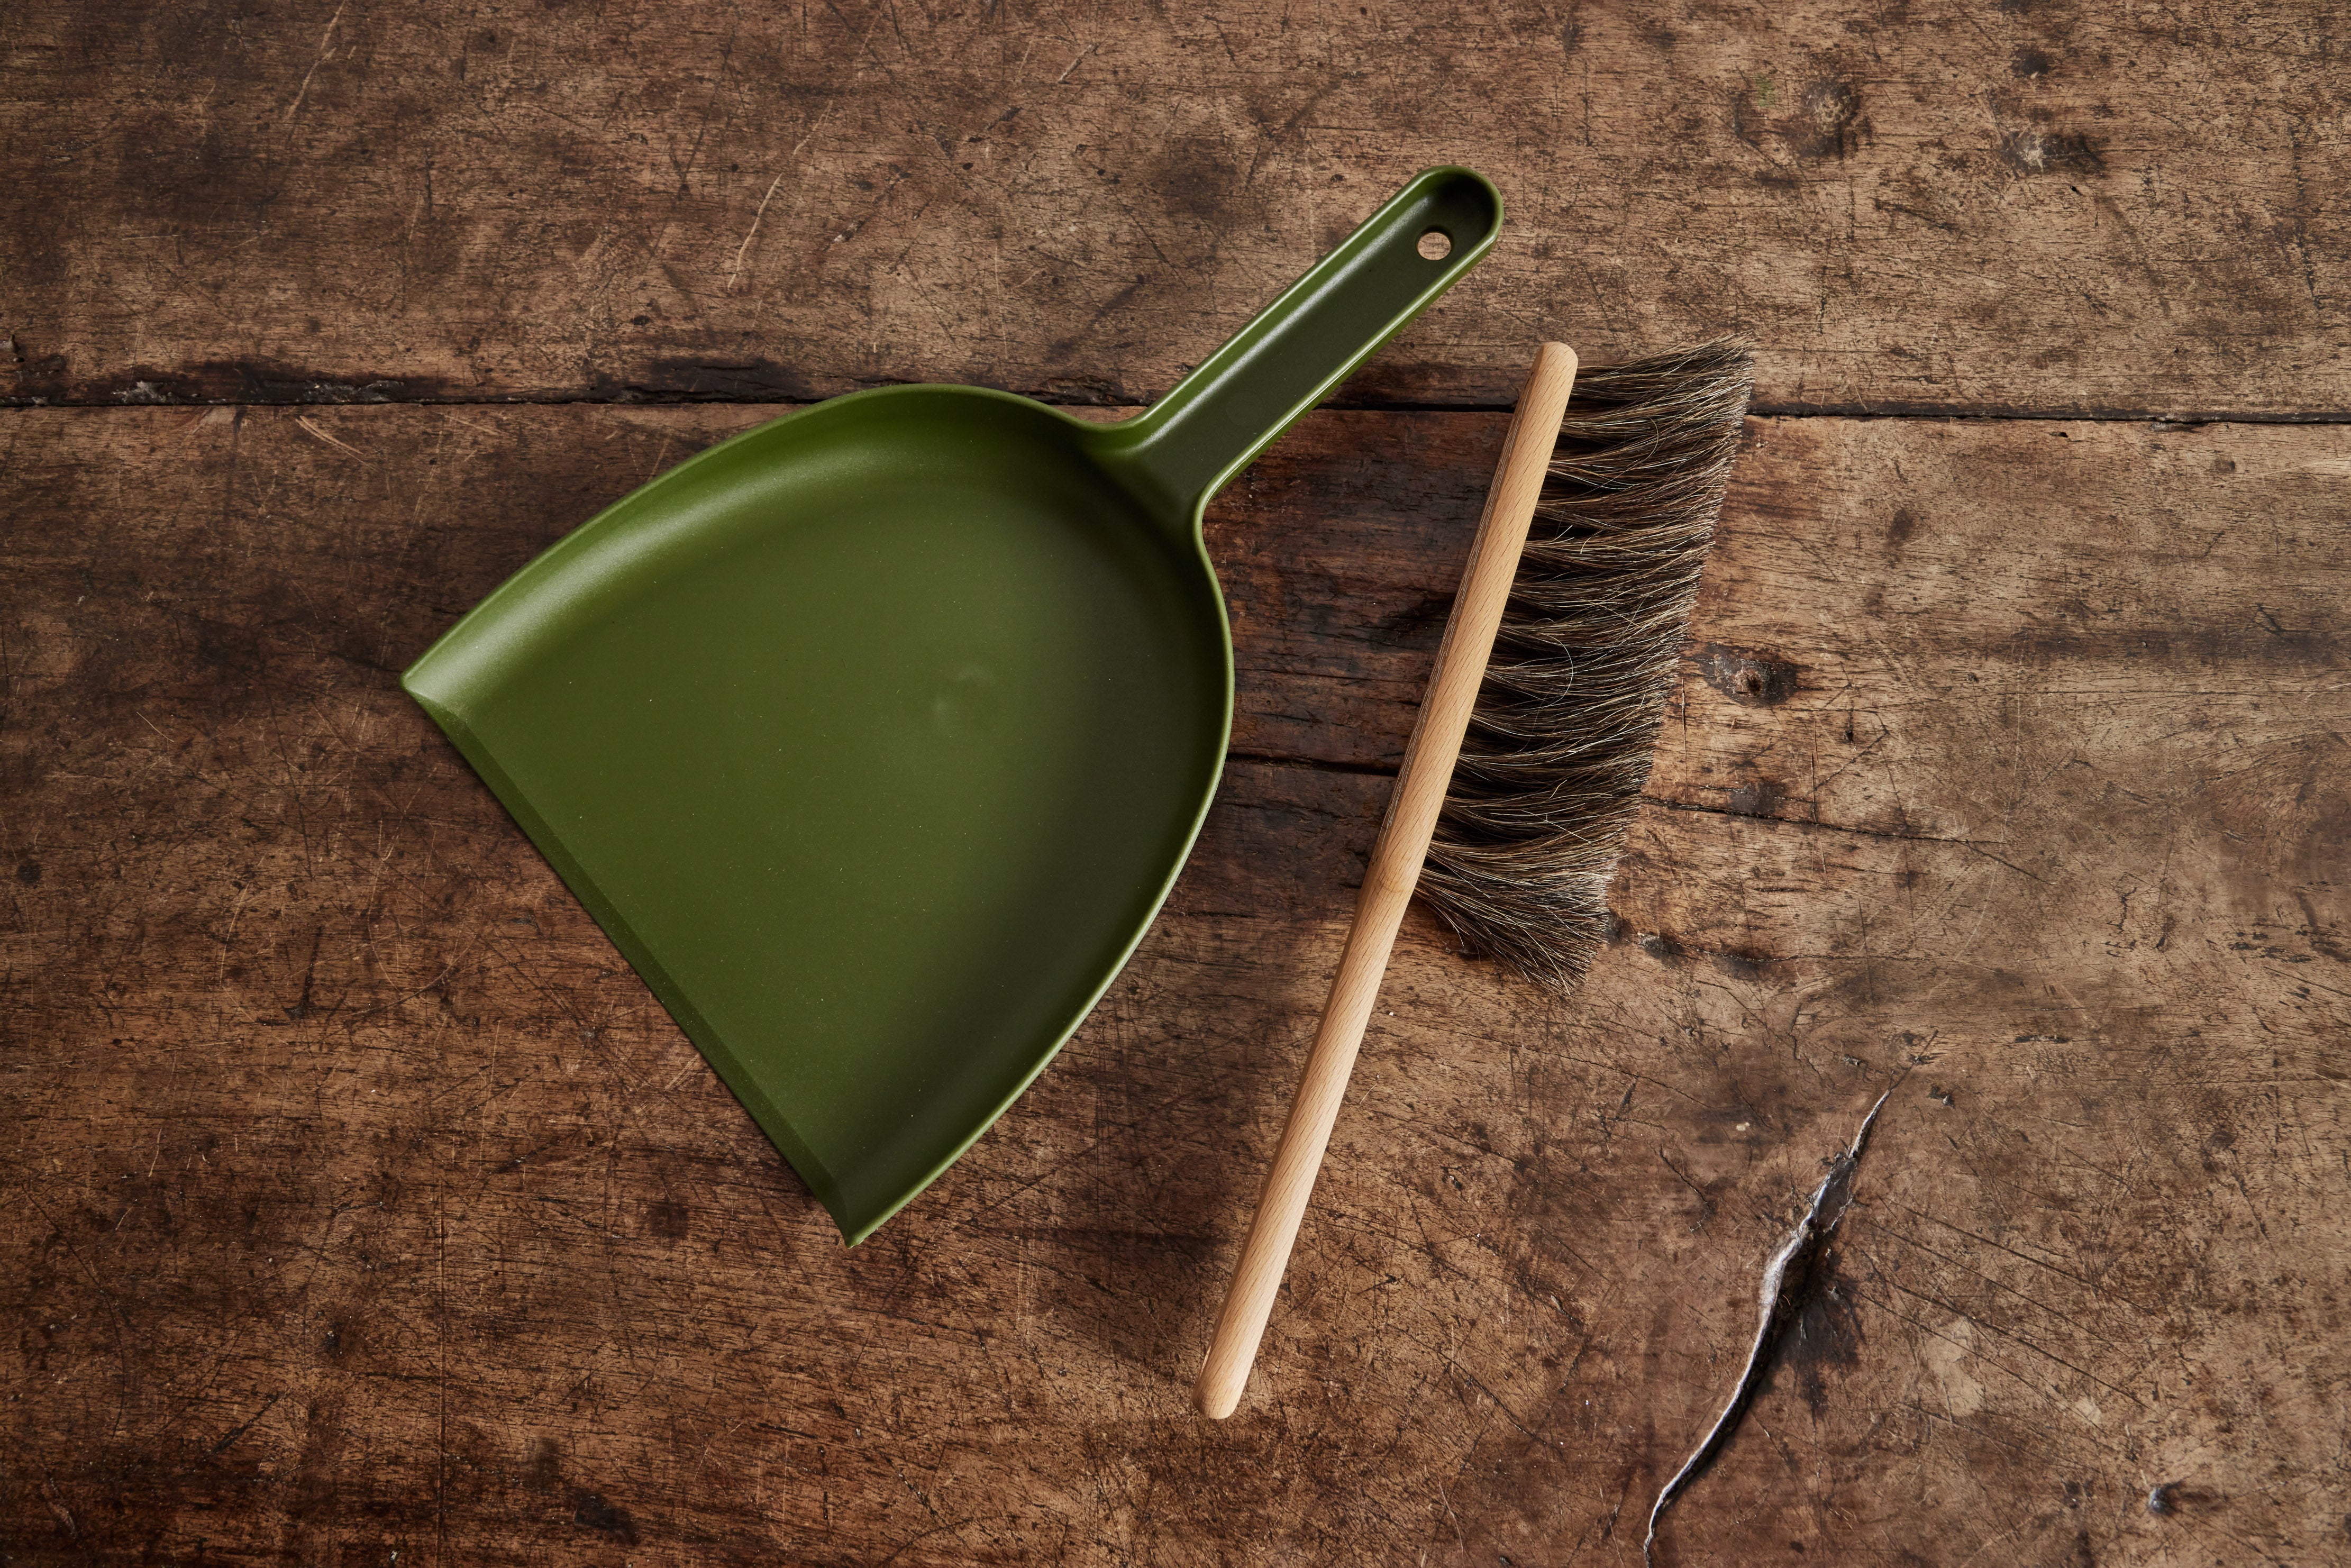 Green Dustpan & Hand Broom